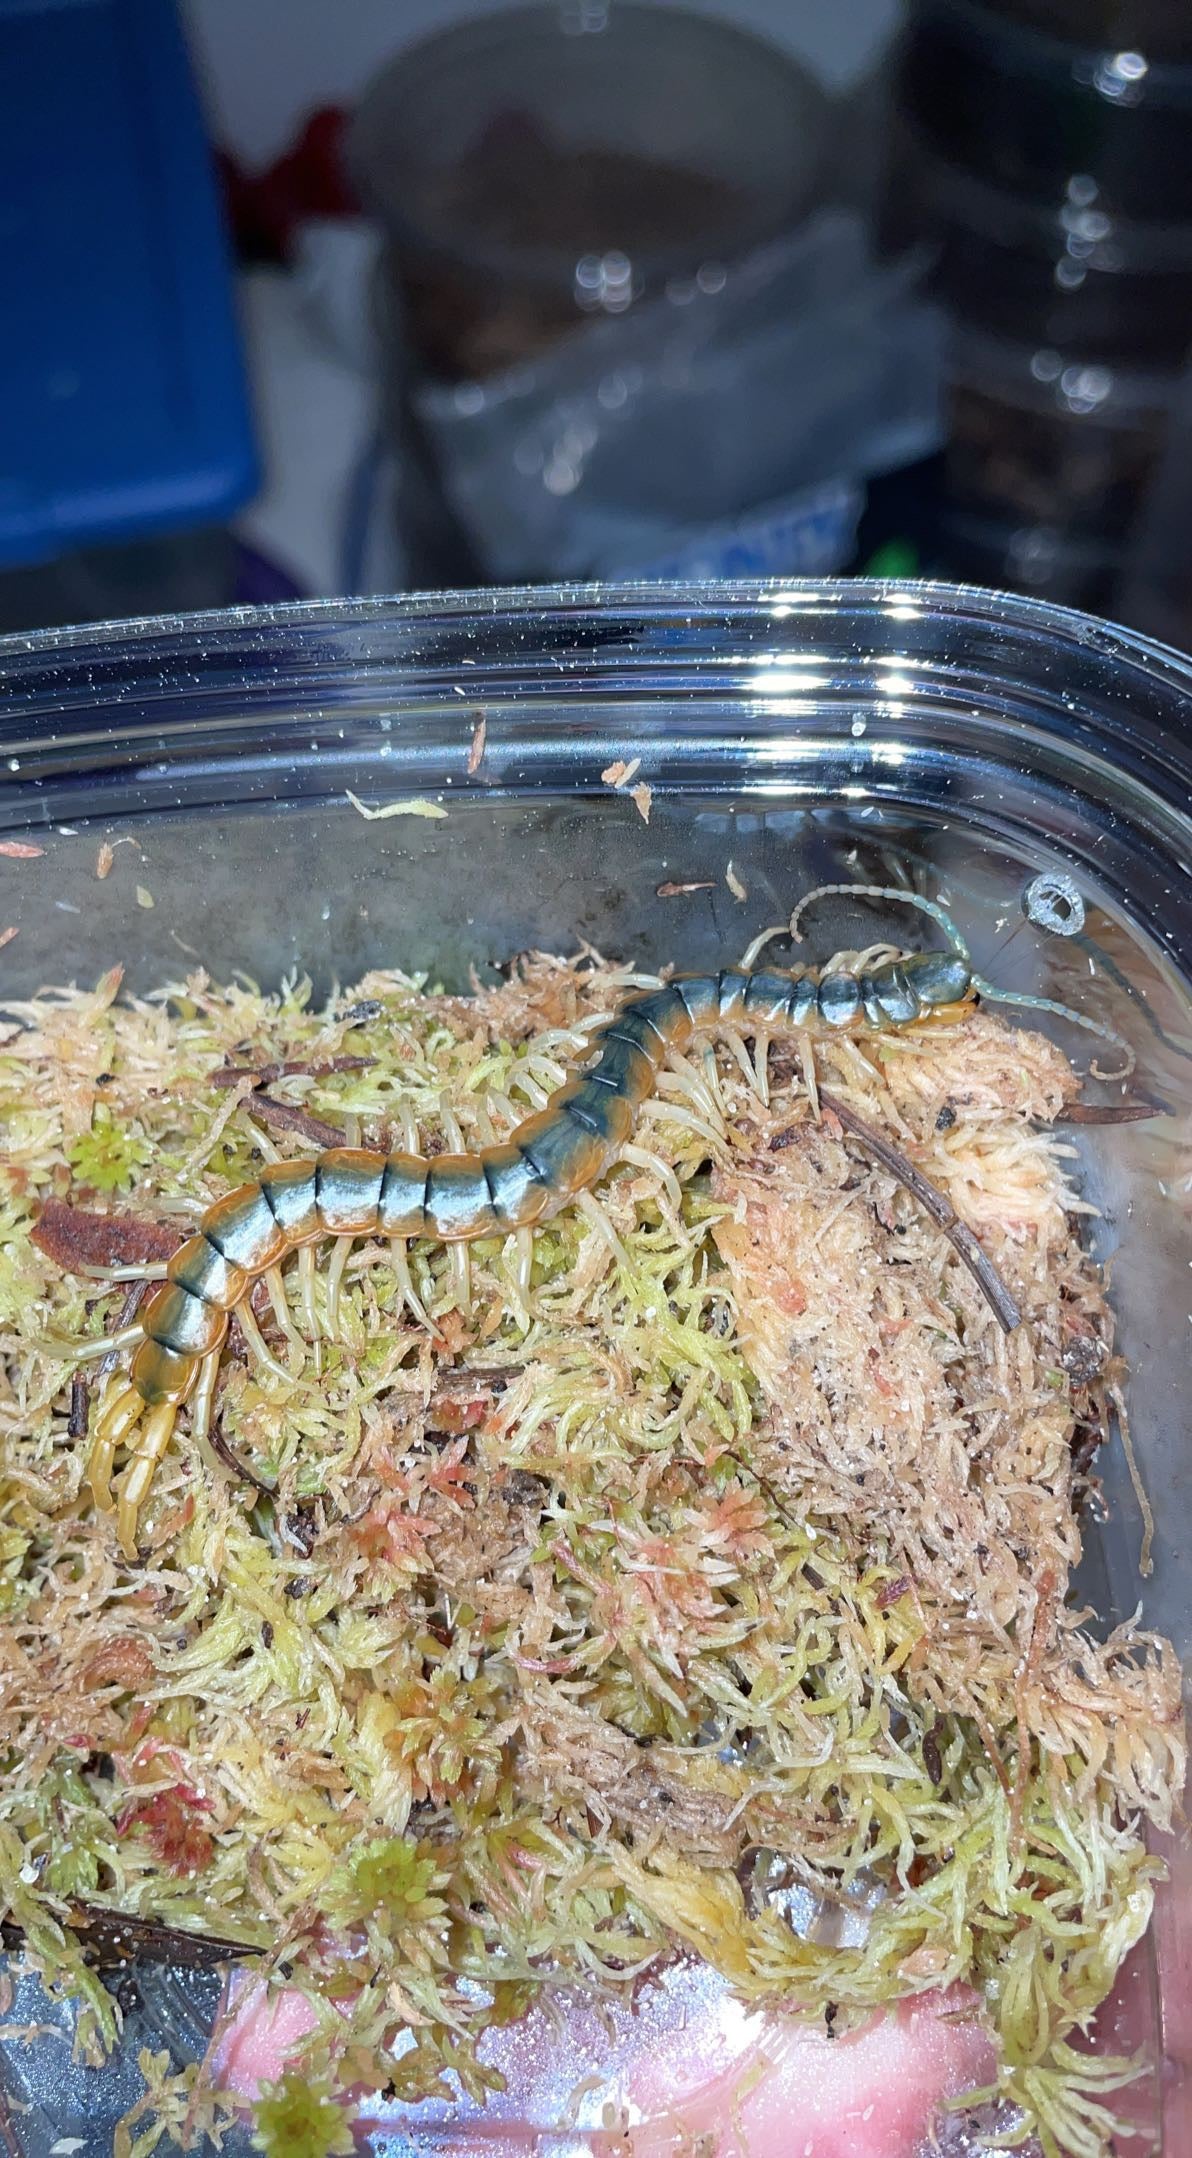 Florida Blue Centipede (Scolopendra viridis)